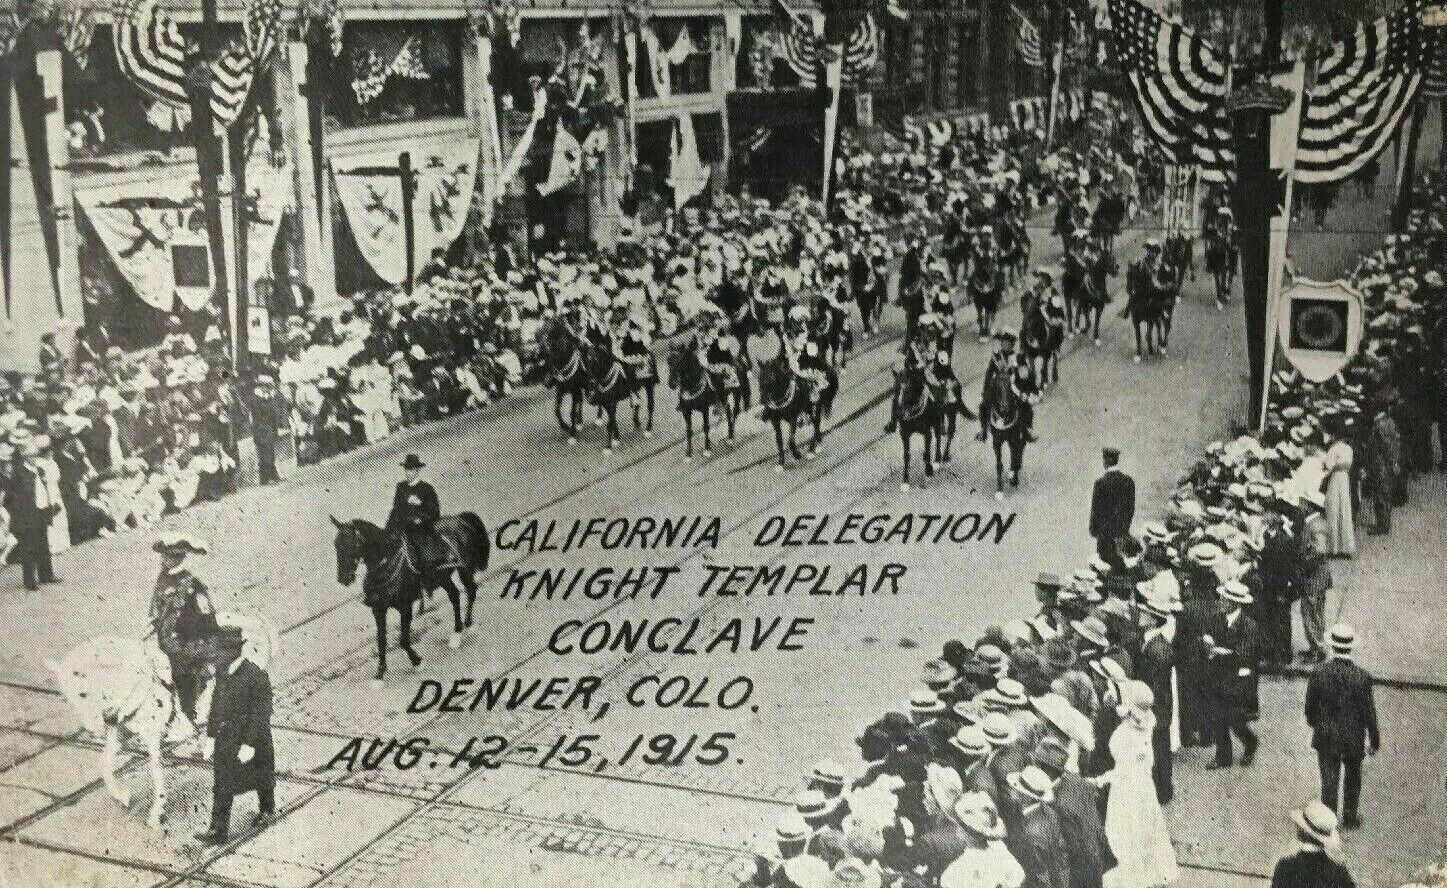 1915 California Delegation Knight Templar Conclave in Denver CO Parade Postcard